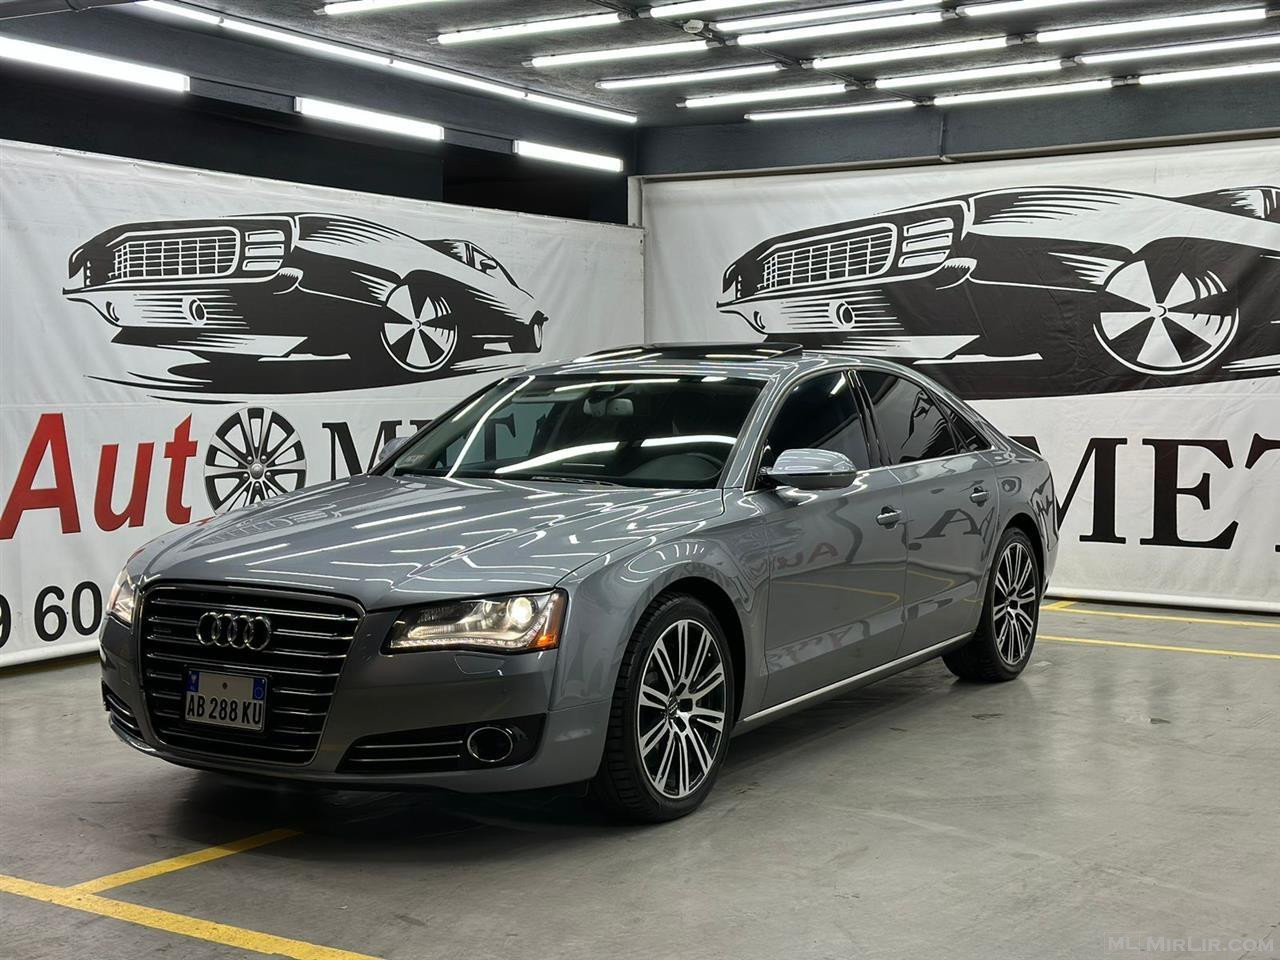  Audi A8  Viti Prodhimit 2011  4.2 Benzine  199.000 KM